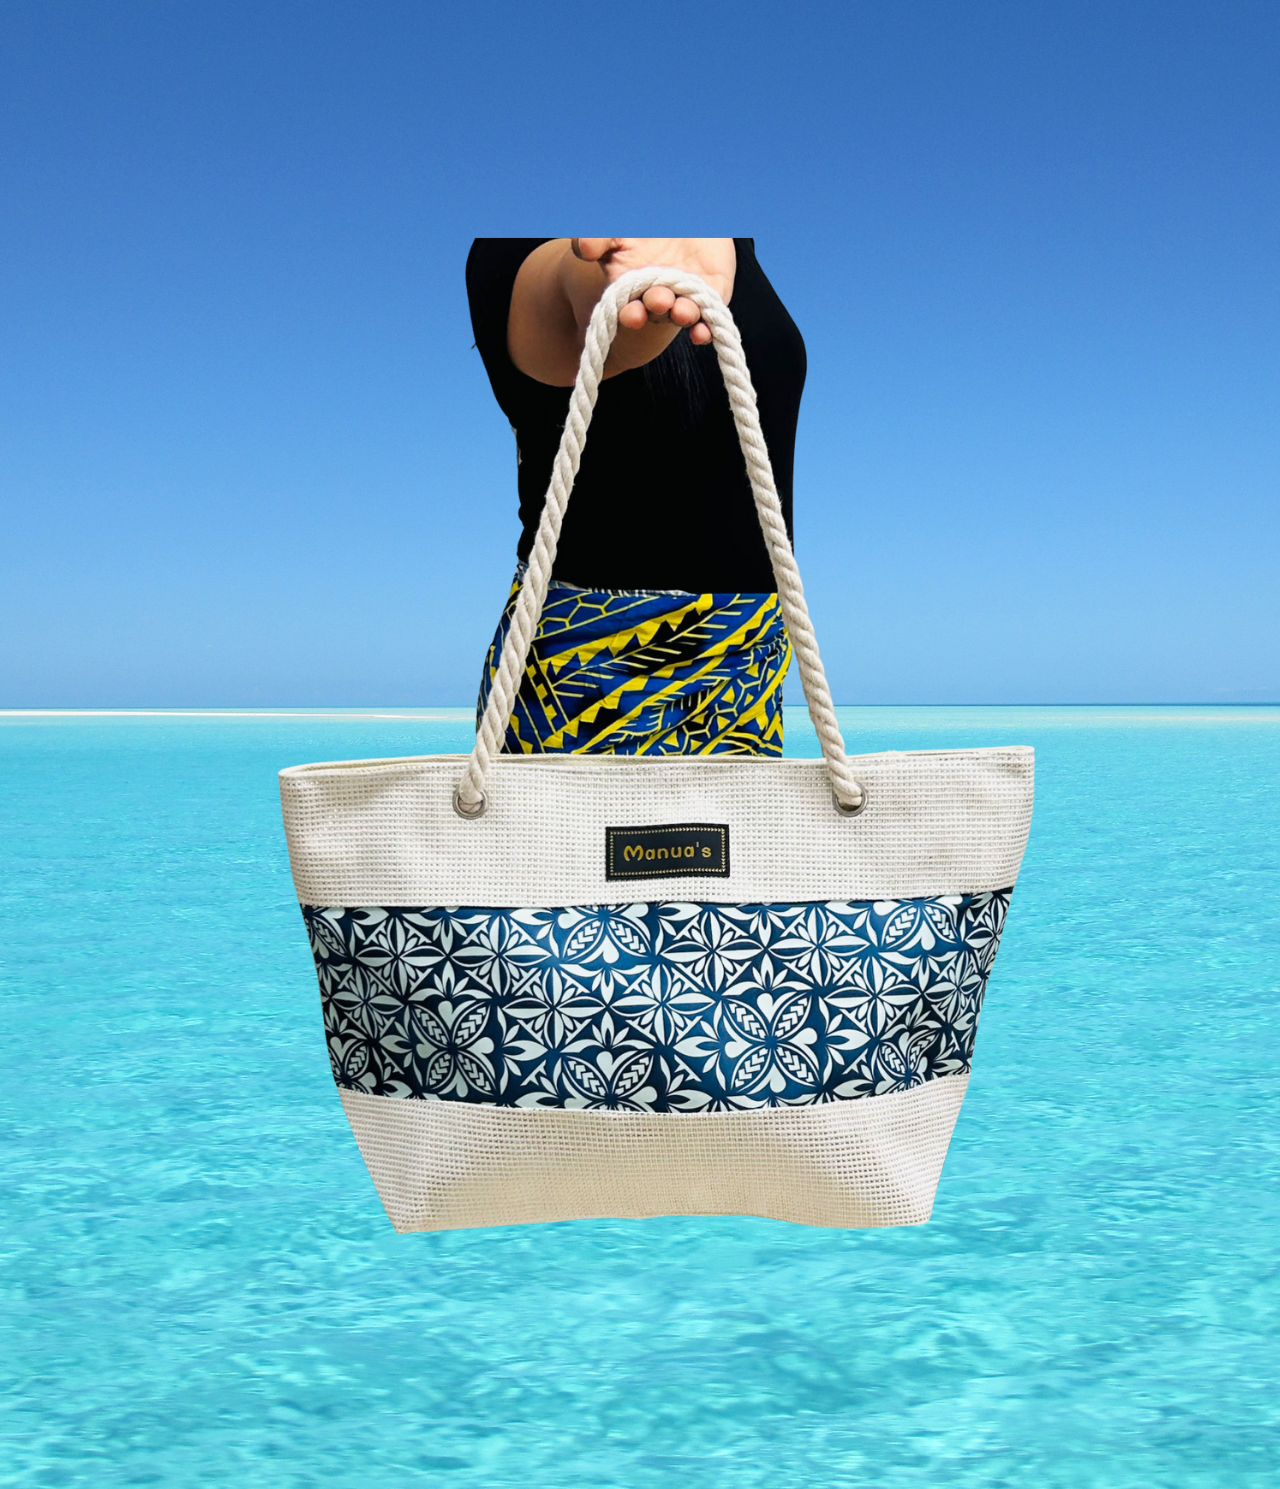 Samoan Design Tote Bag - Cream & Teal